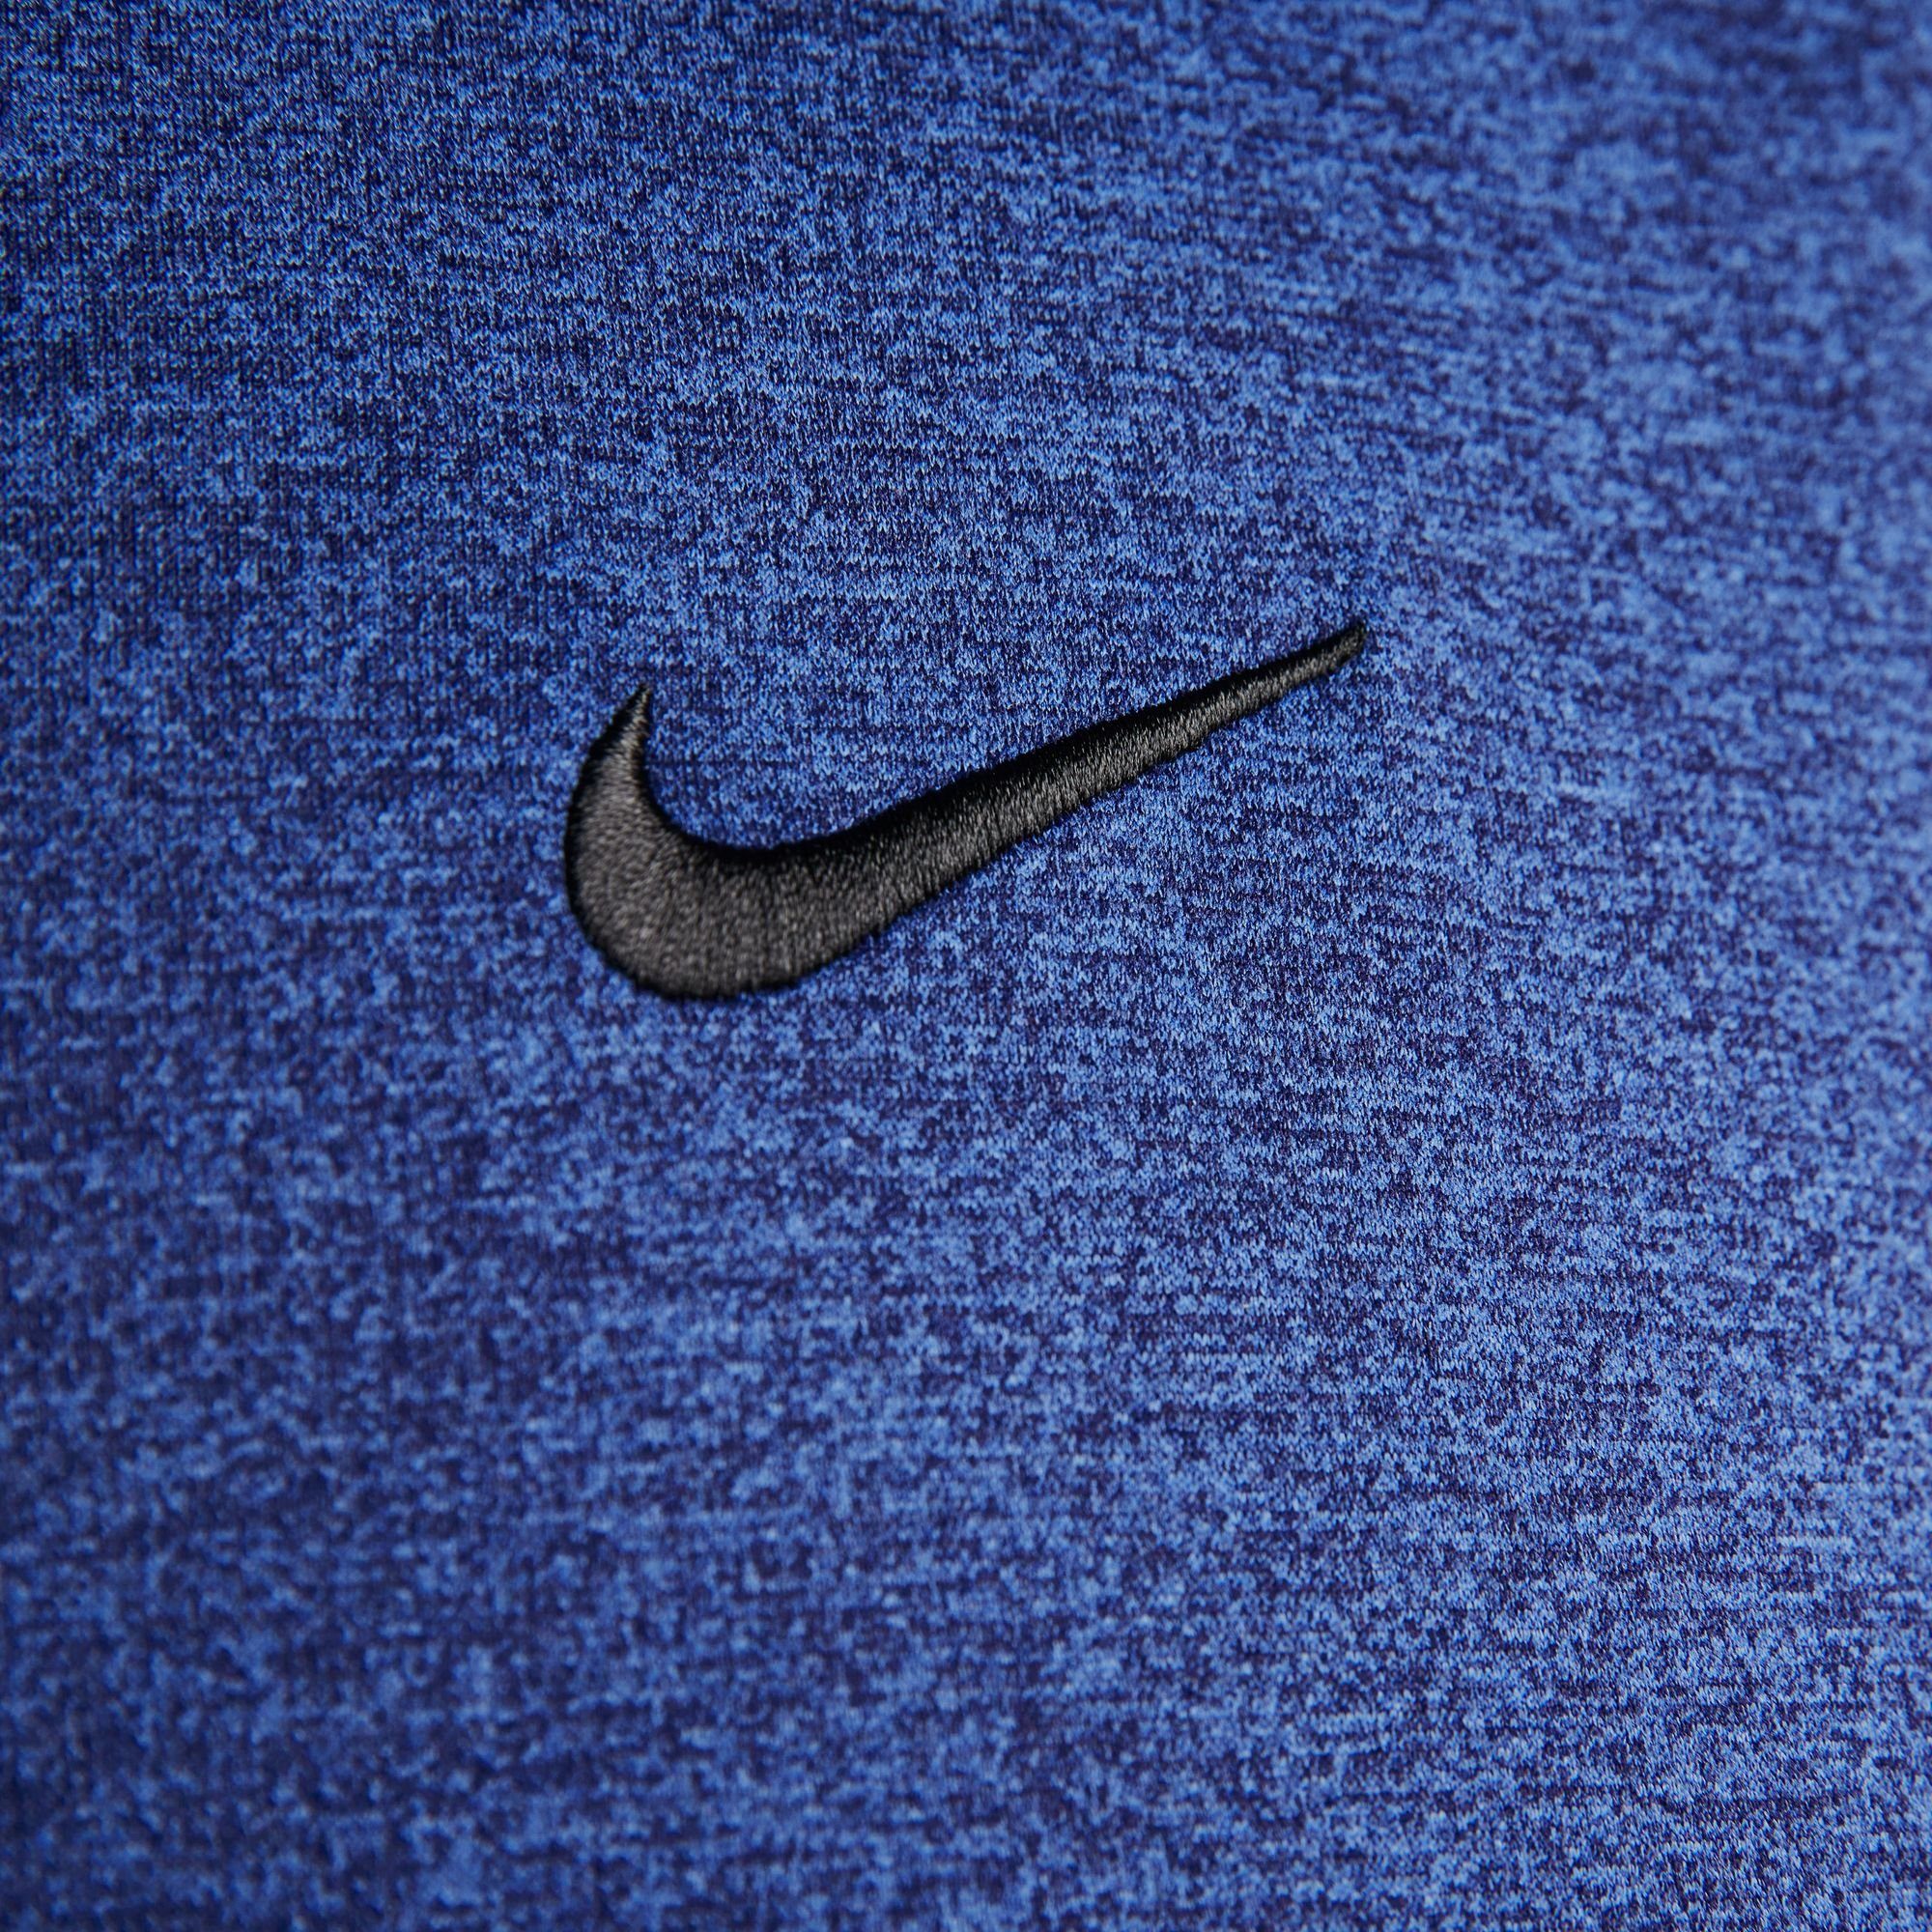 Nike Kapuzensweatshirt THERMA-FIT MEN'S PULLOVER VOID/HTR/GAME FITNESS ROYAL/BLACK HOODIE BLUE